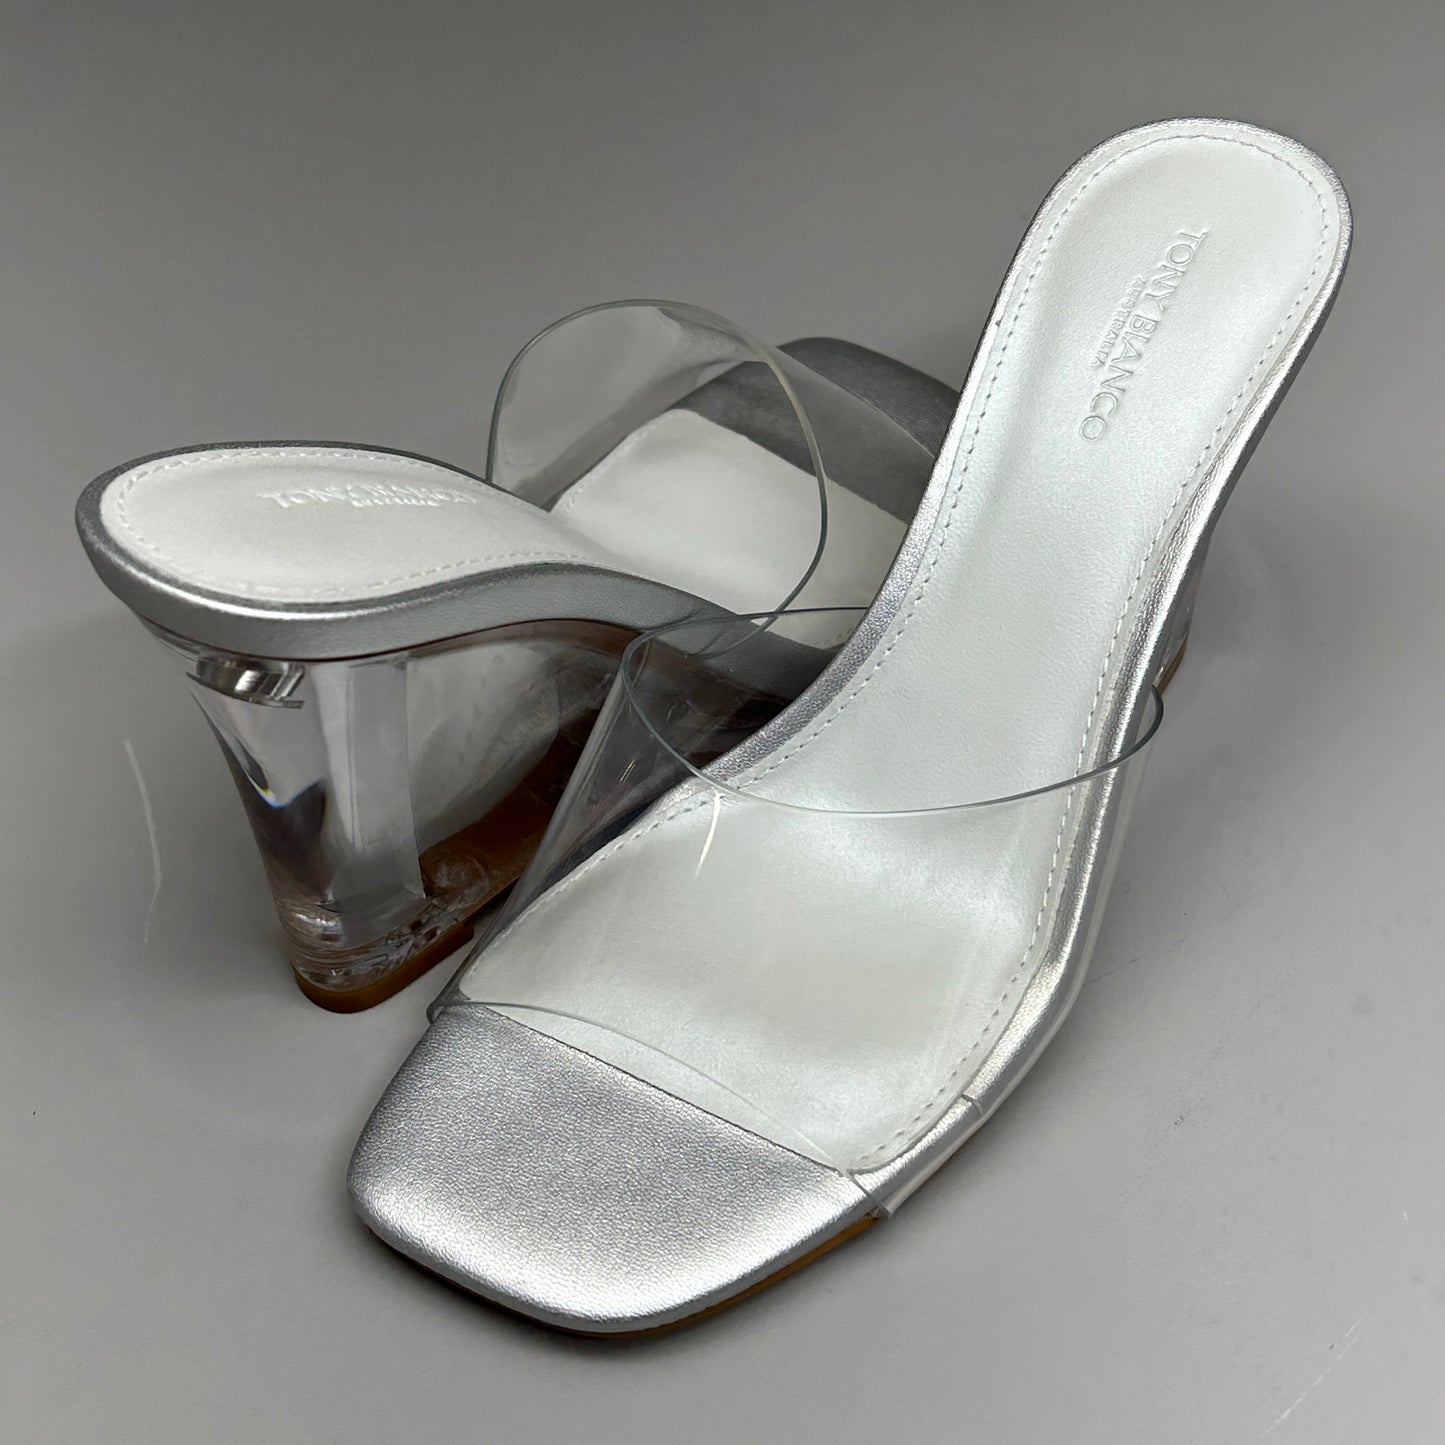 TONY BIANCO Alessi Clear Vinylite/Silver Wedges Women's Heels Sz 7 (New)